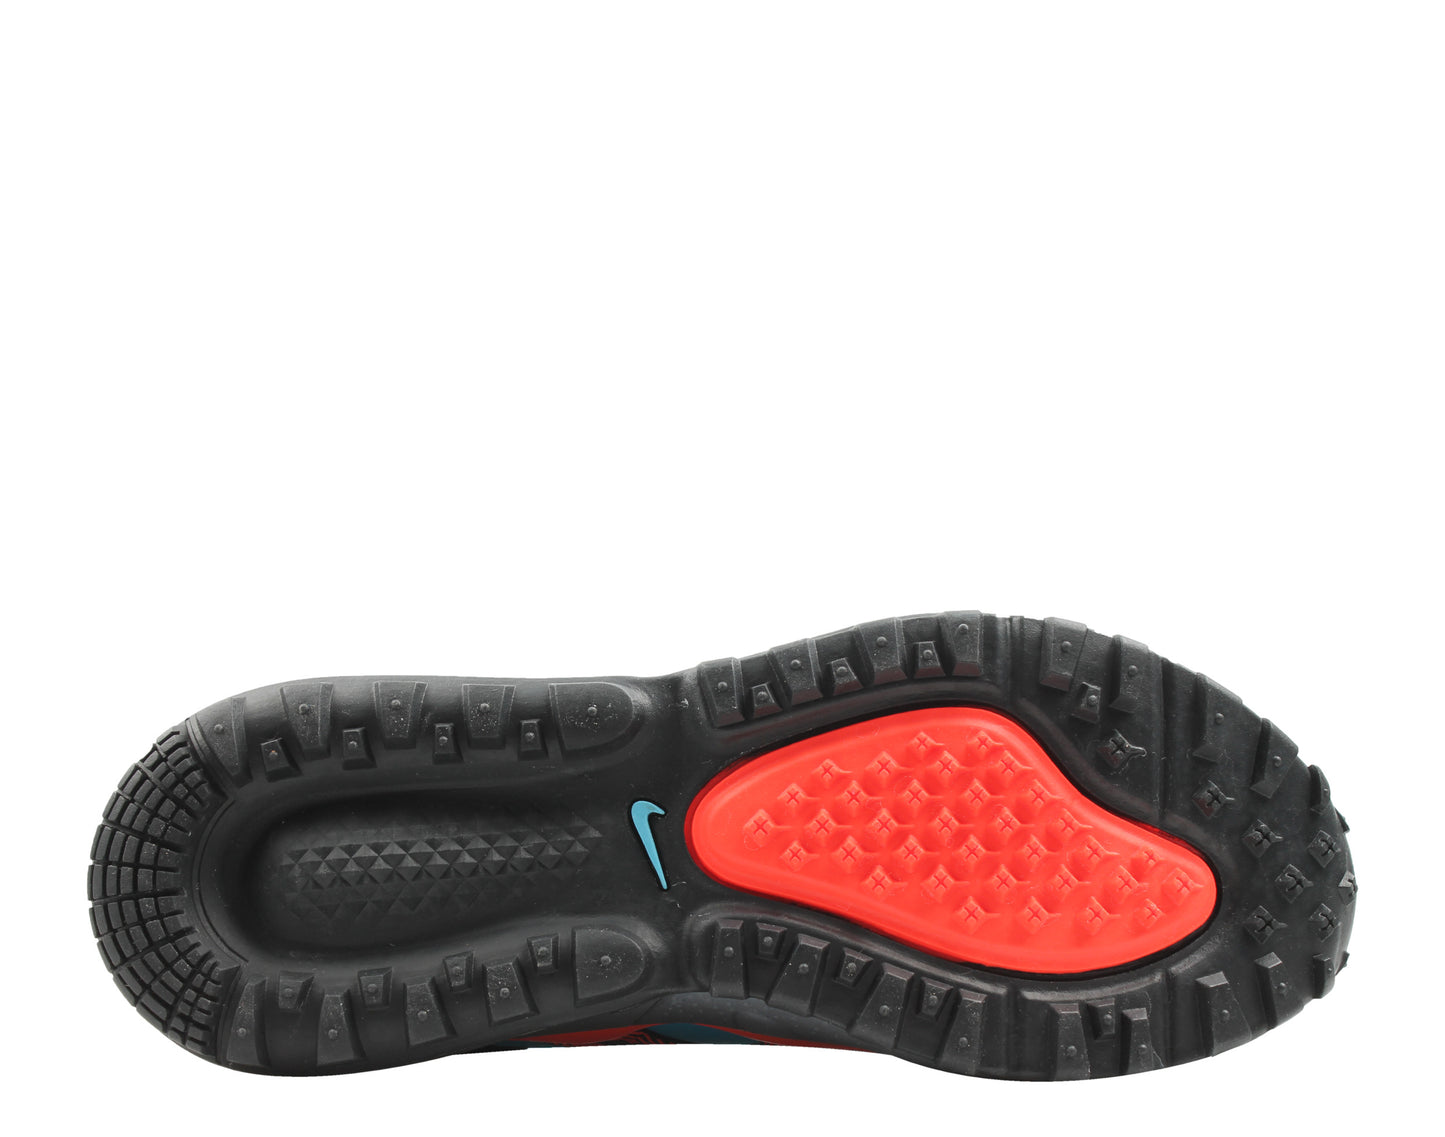 Nike Air Max 270 Bowfin Dark Russet/Black Men's Running Shoes AJ7200-200